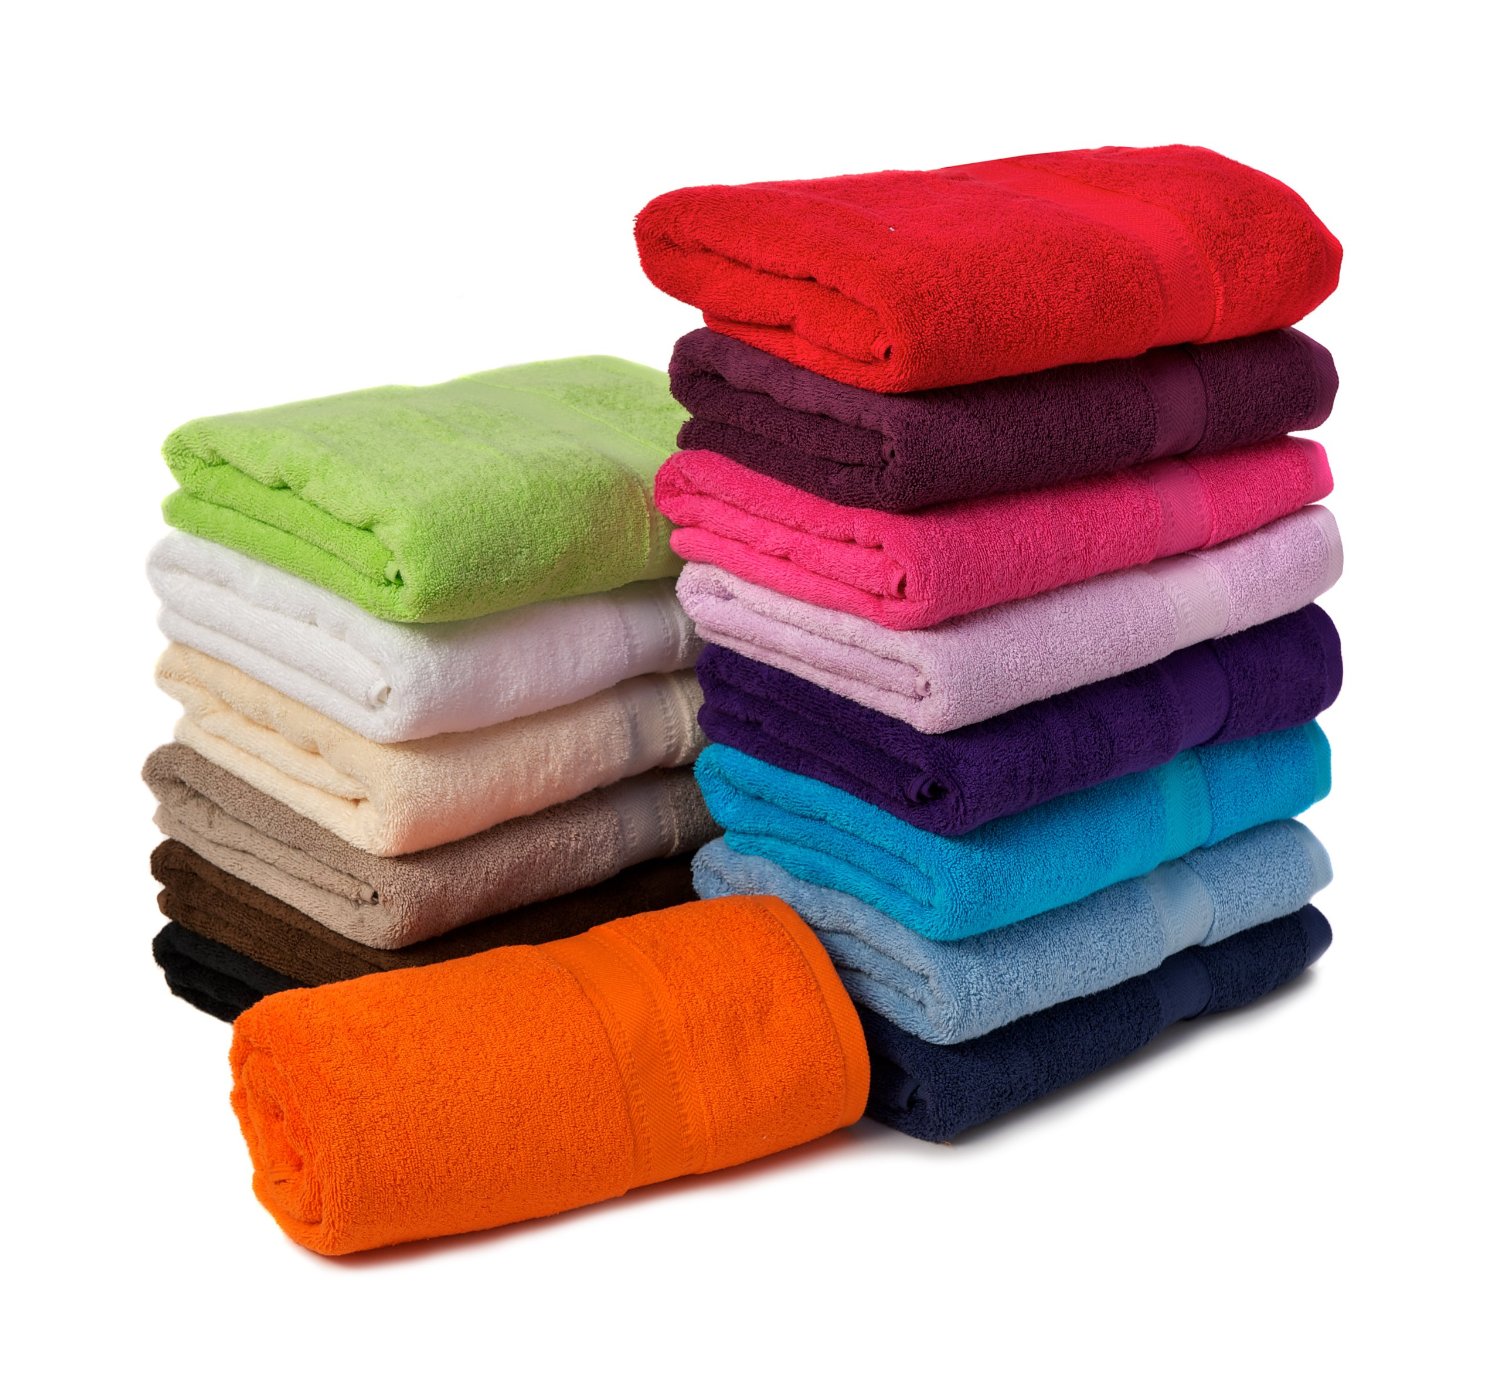 Полотенца chesto. Полотенце. Полотенце/разноцветное. Сложенные полотенца. Стопка полотенец.